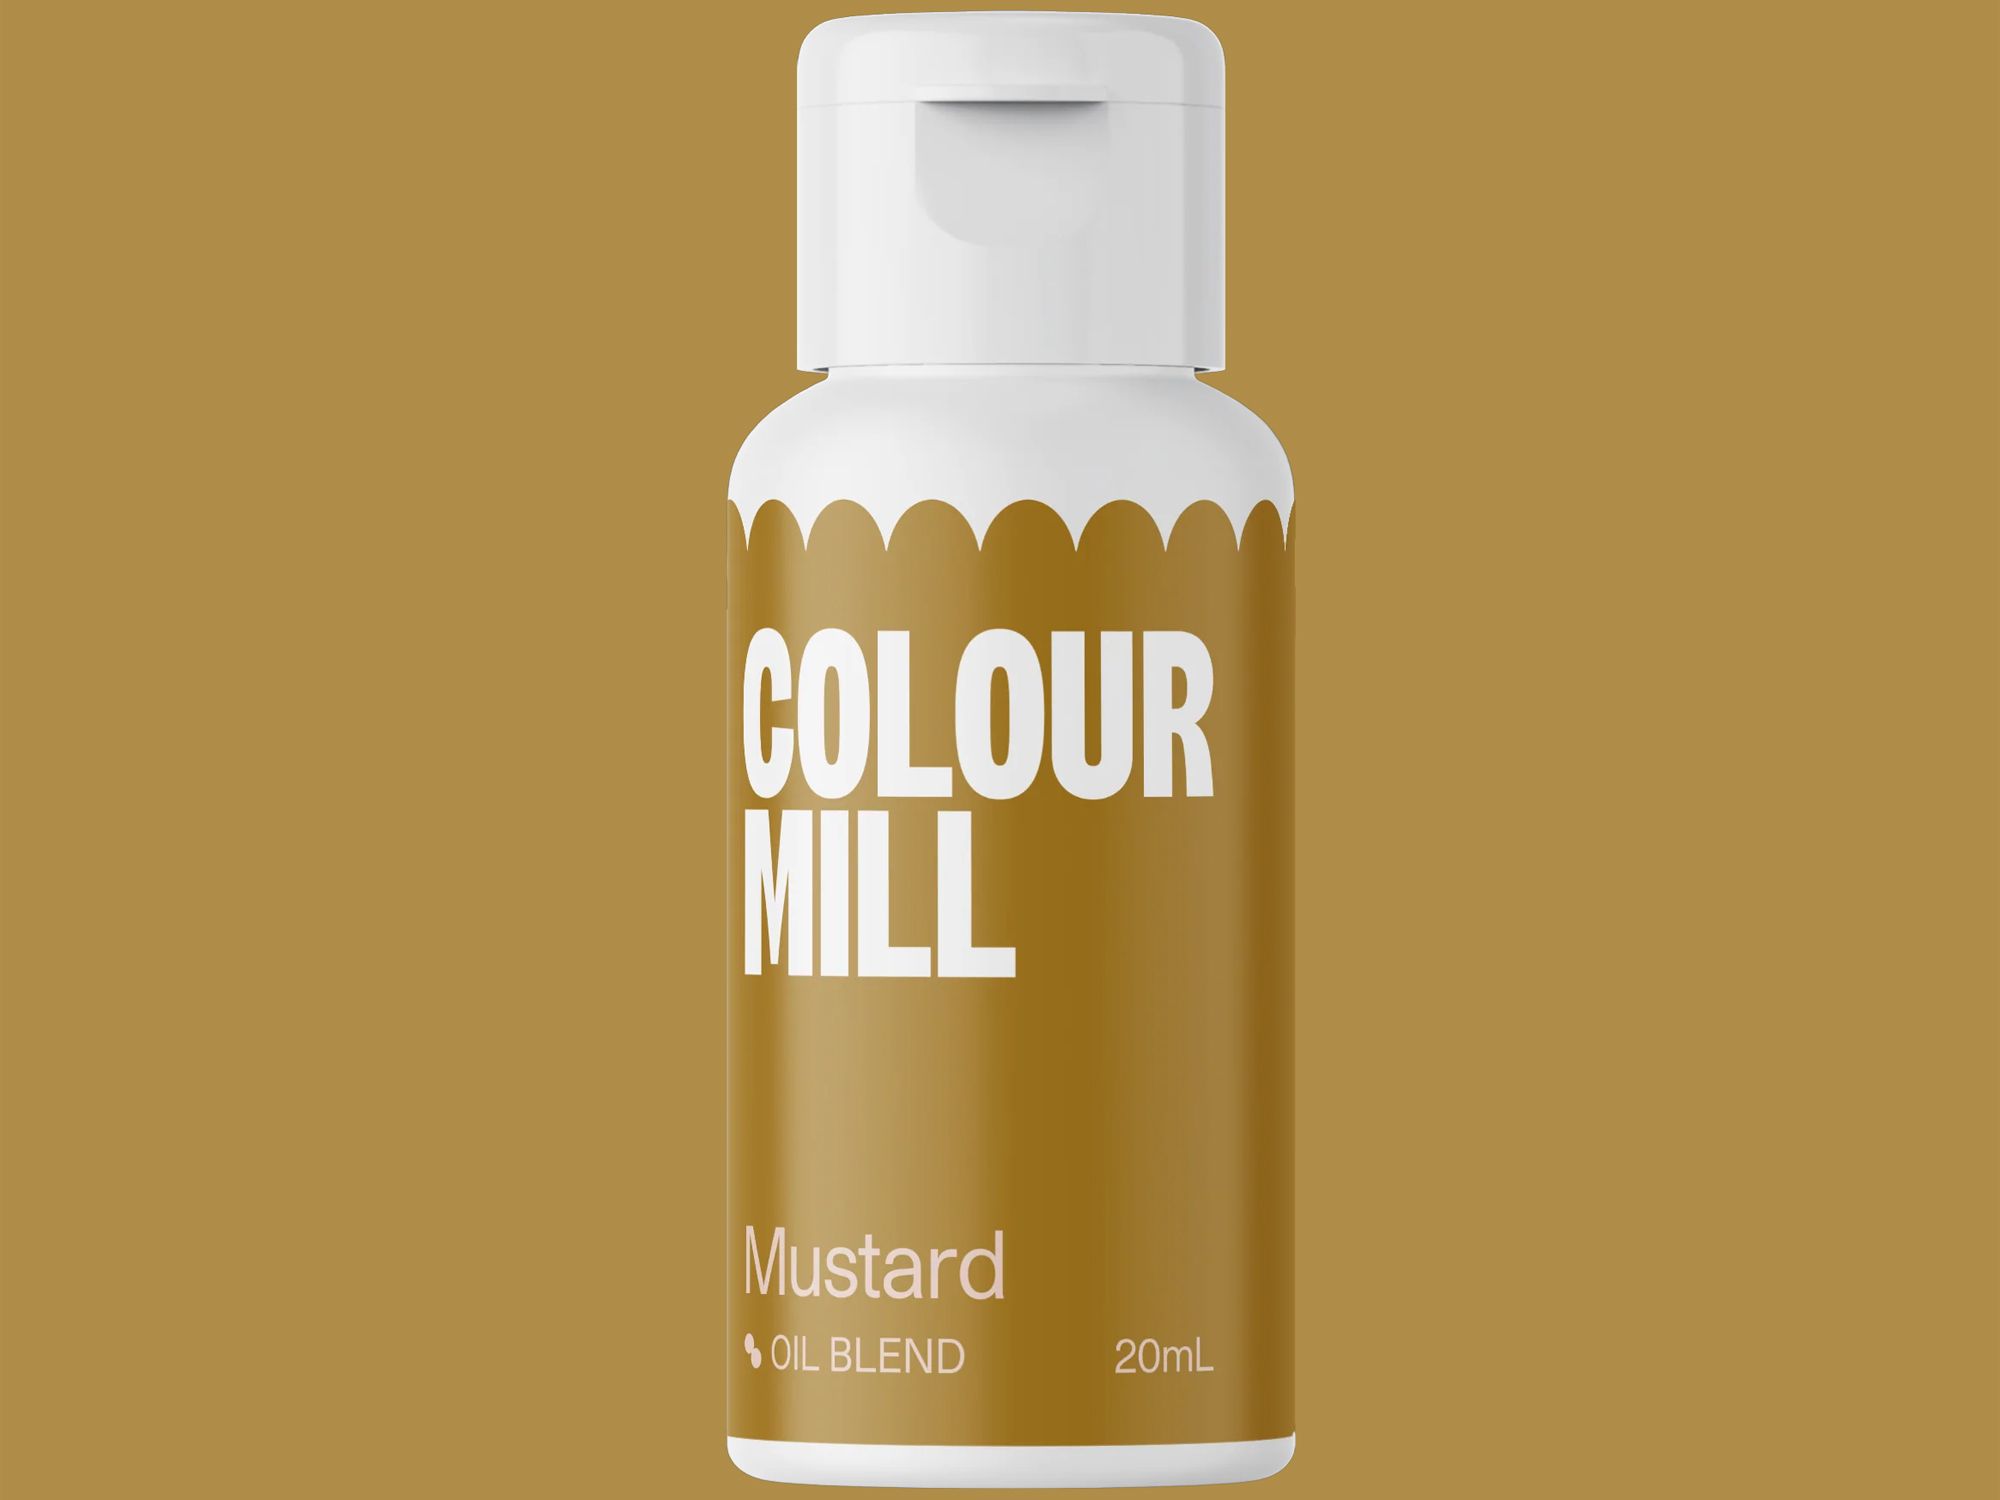 Colour Mill Mustard (Oil Blend) 20ml